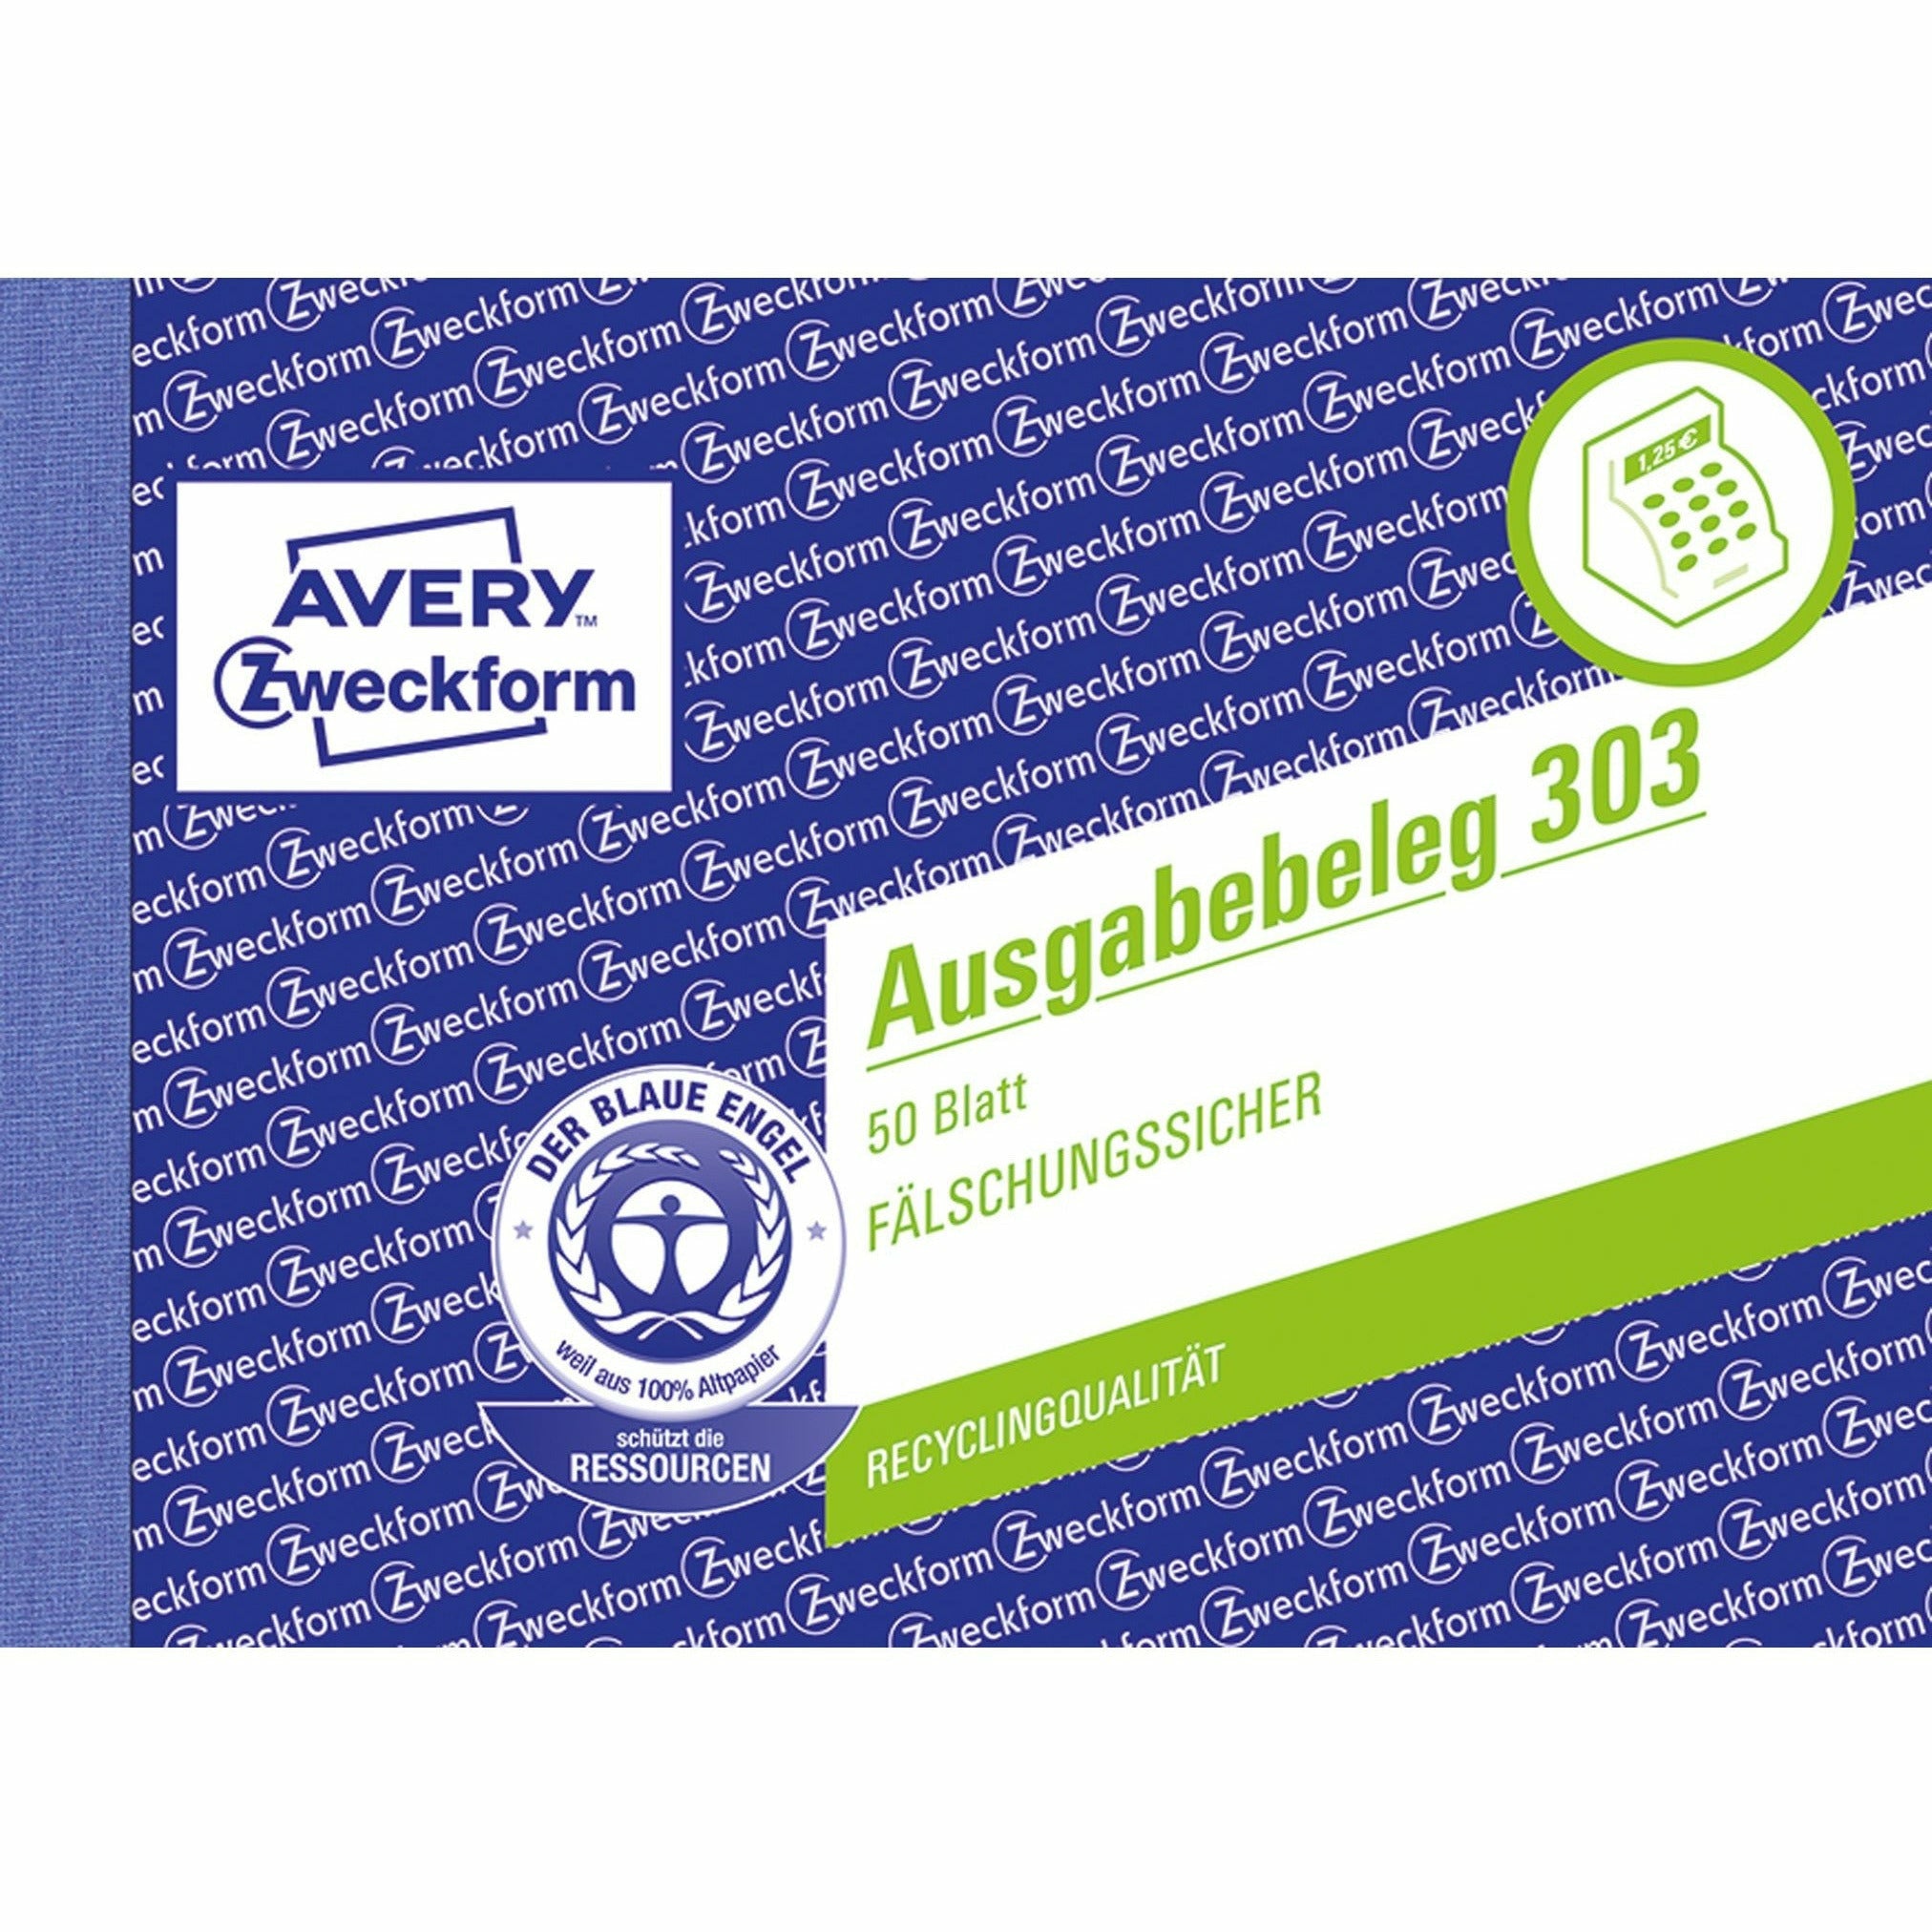 Avery-Zweckform | Ausgabebeleg mit Dokumentendruck | 303